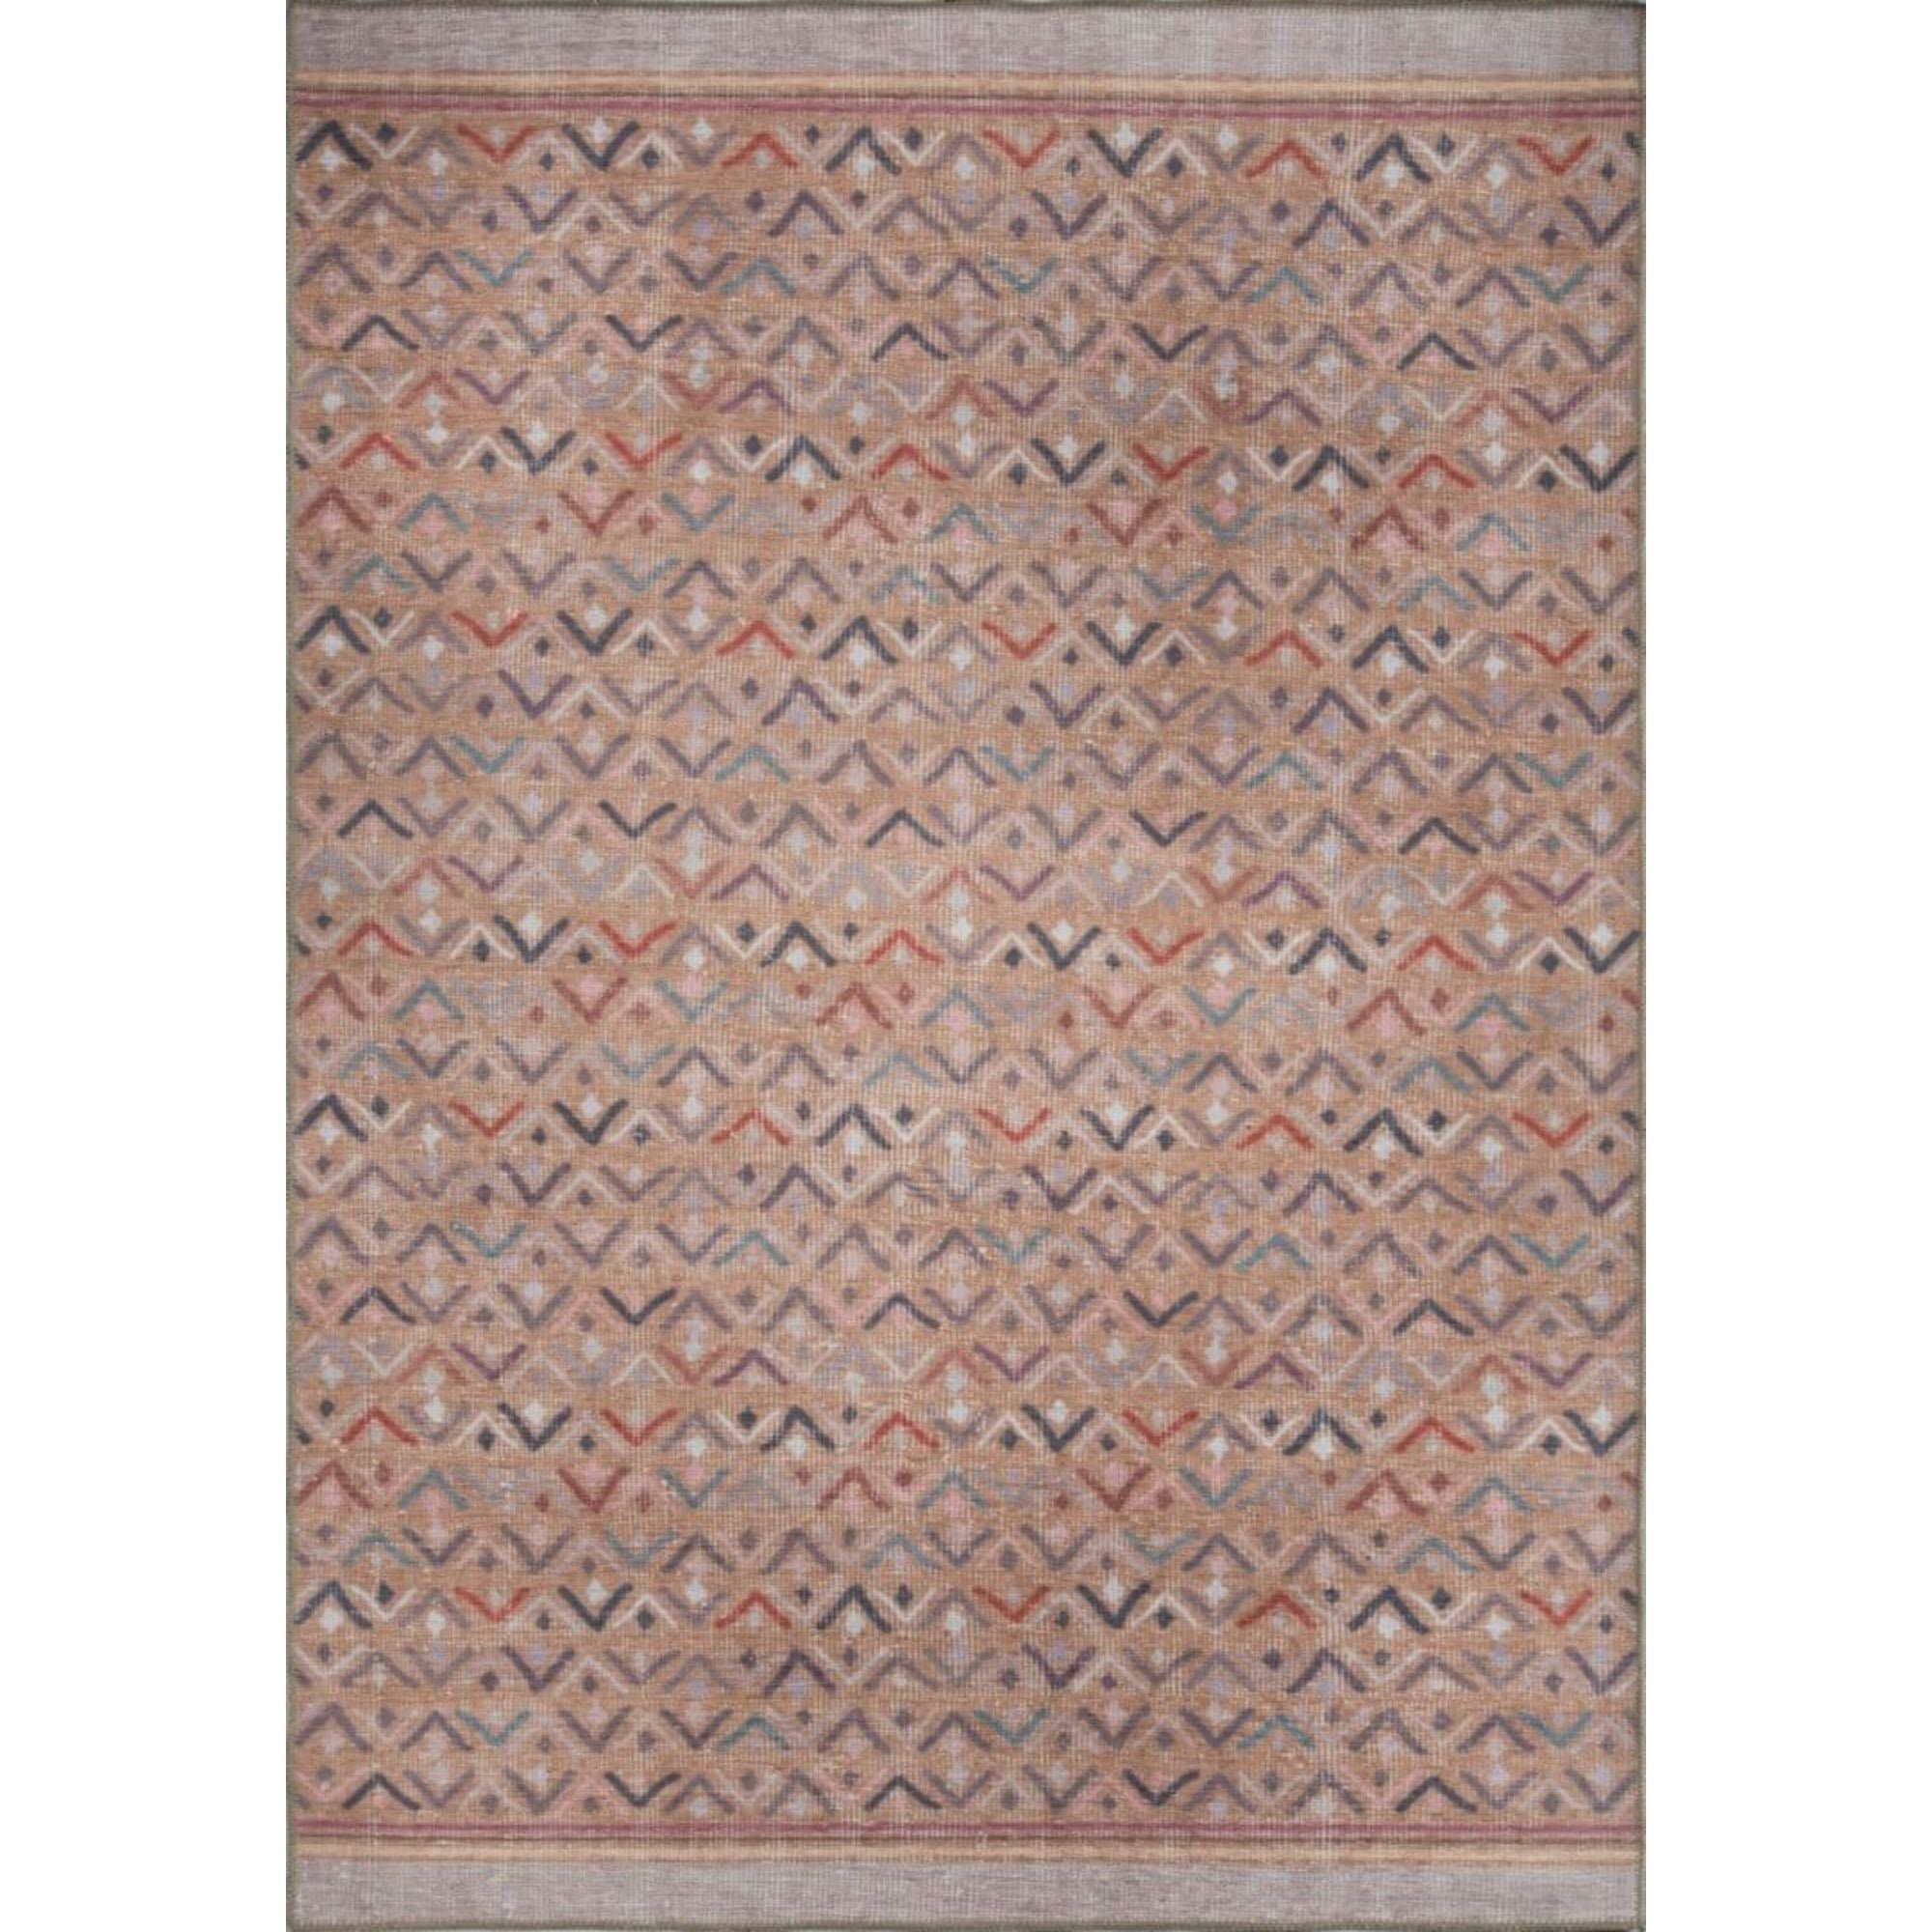 TONDO rectangular outdoor rug - Shop Online